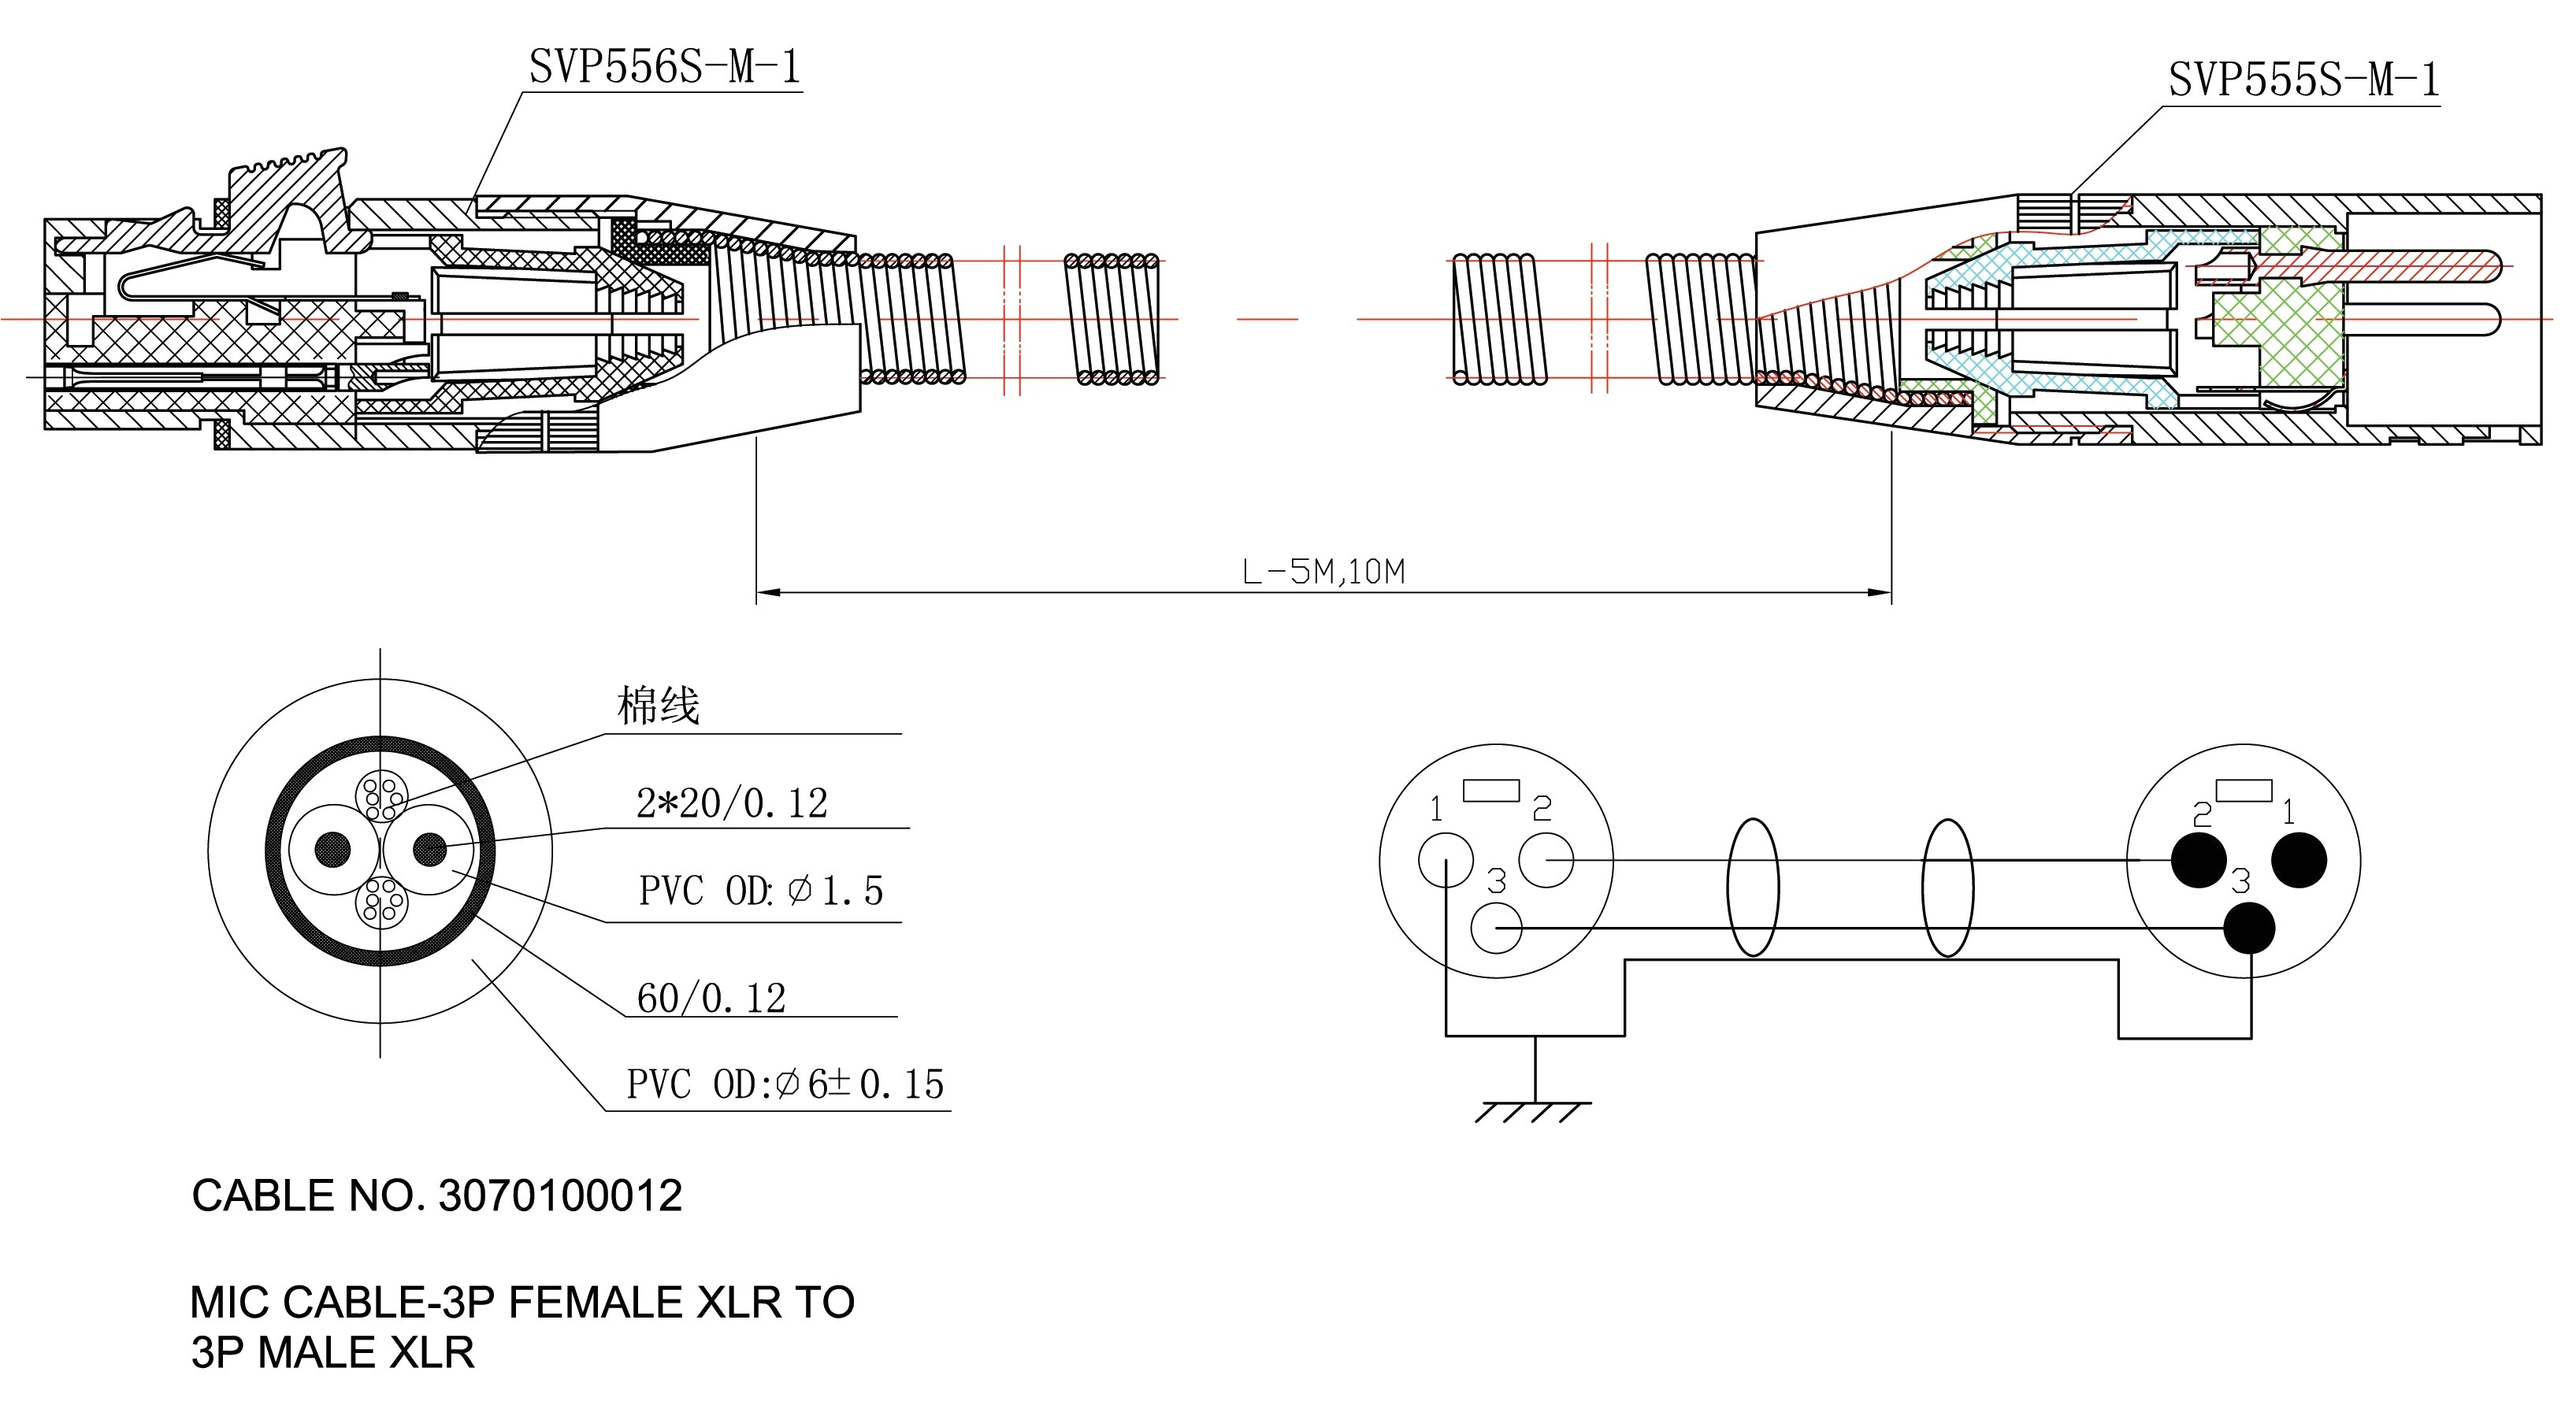 schecter guitar wiring diagram inspirationa diamond series of random jpg